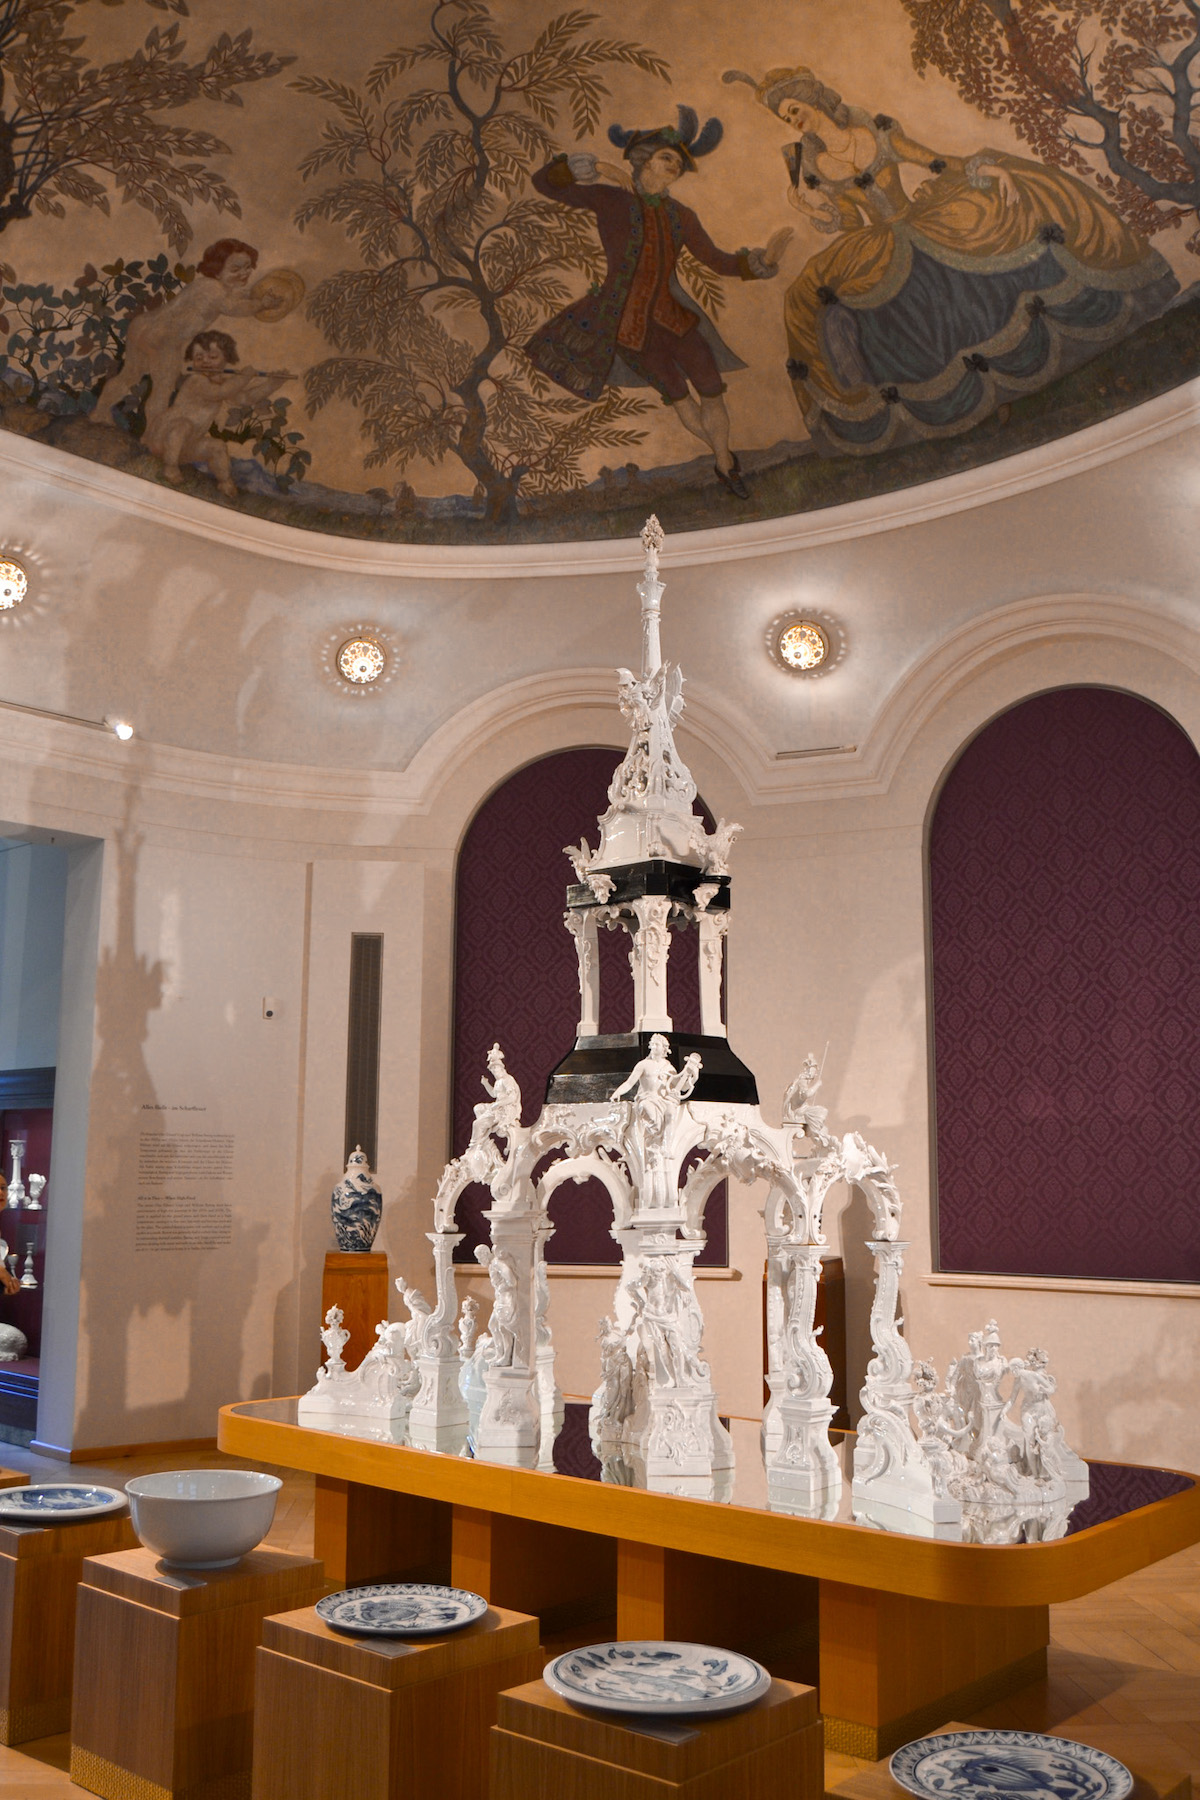 An exhibit in the Meissen porcelain museum